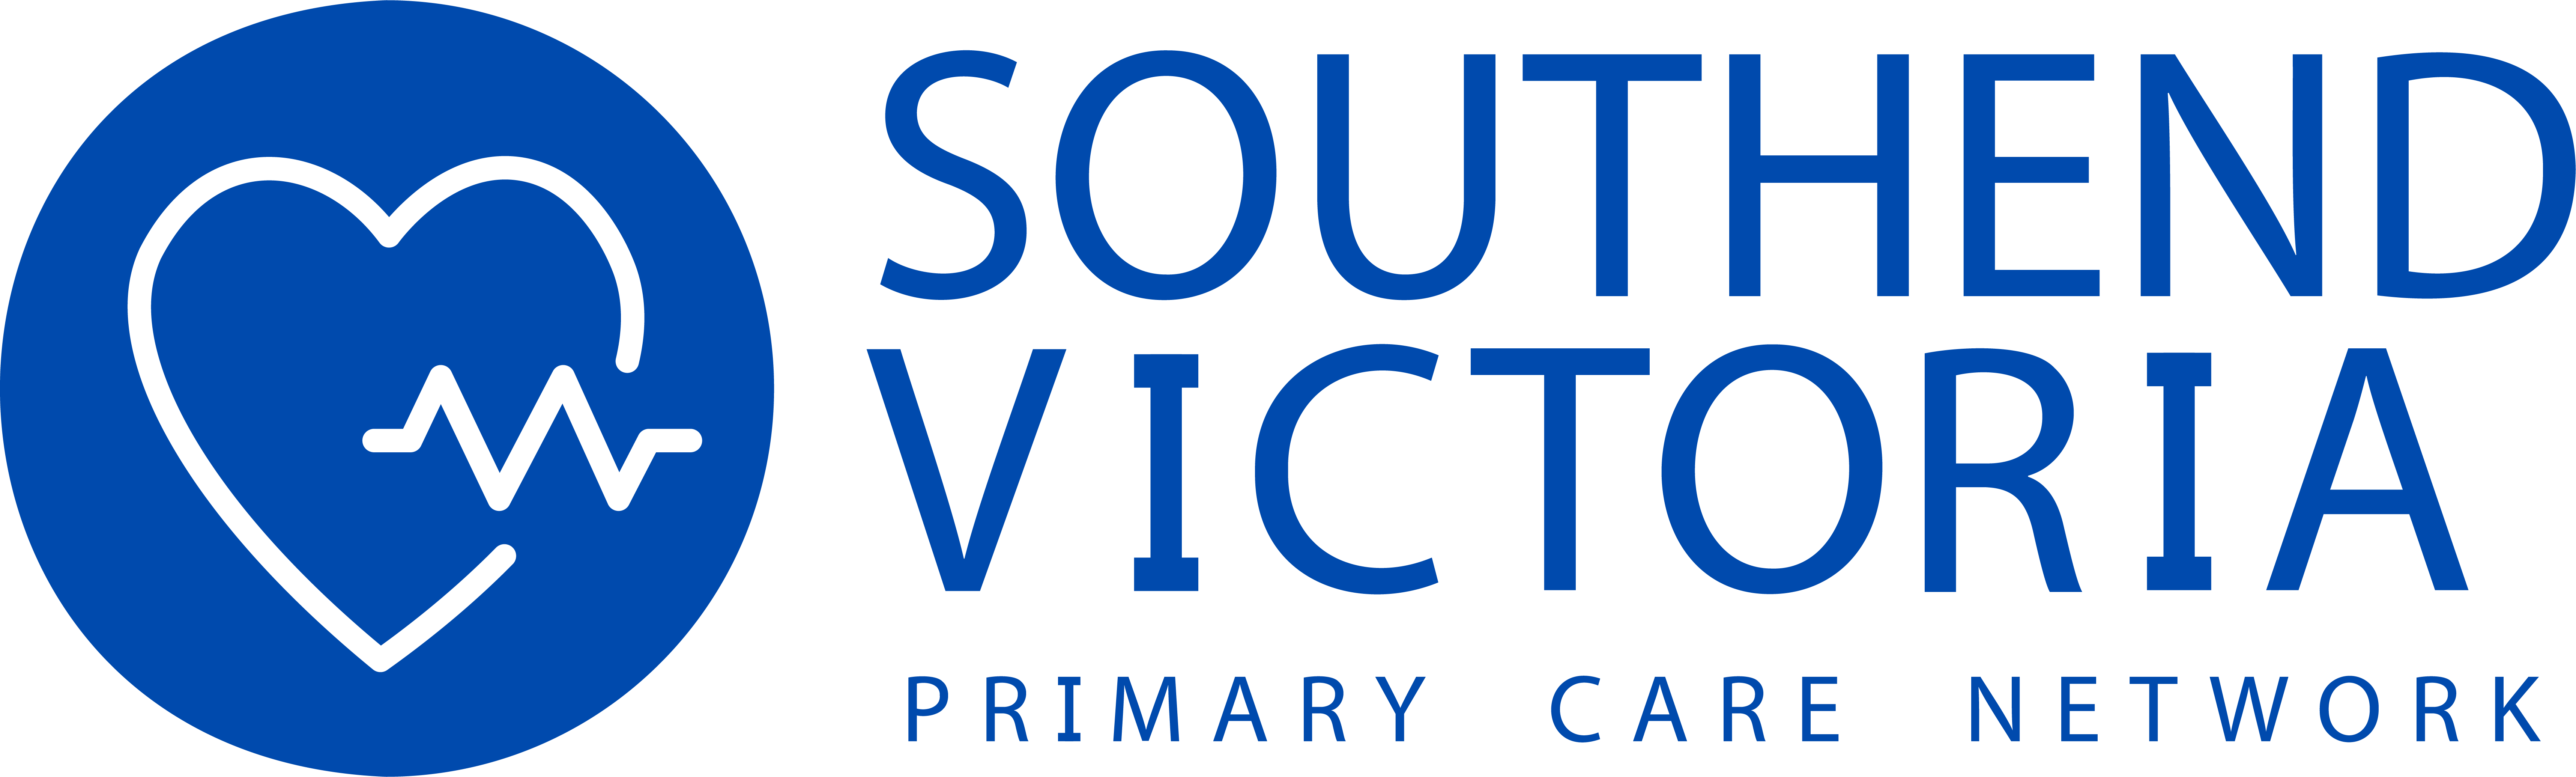 Southend Victoria Primary Care Network logo